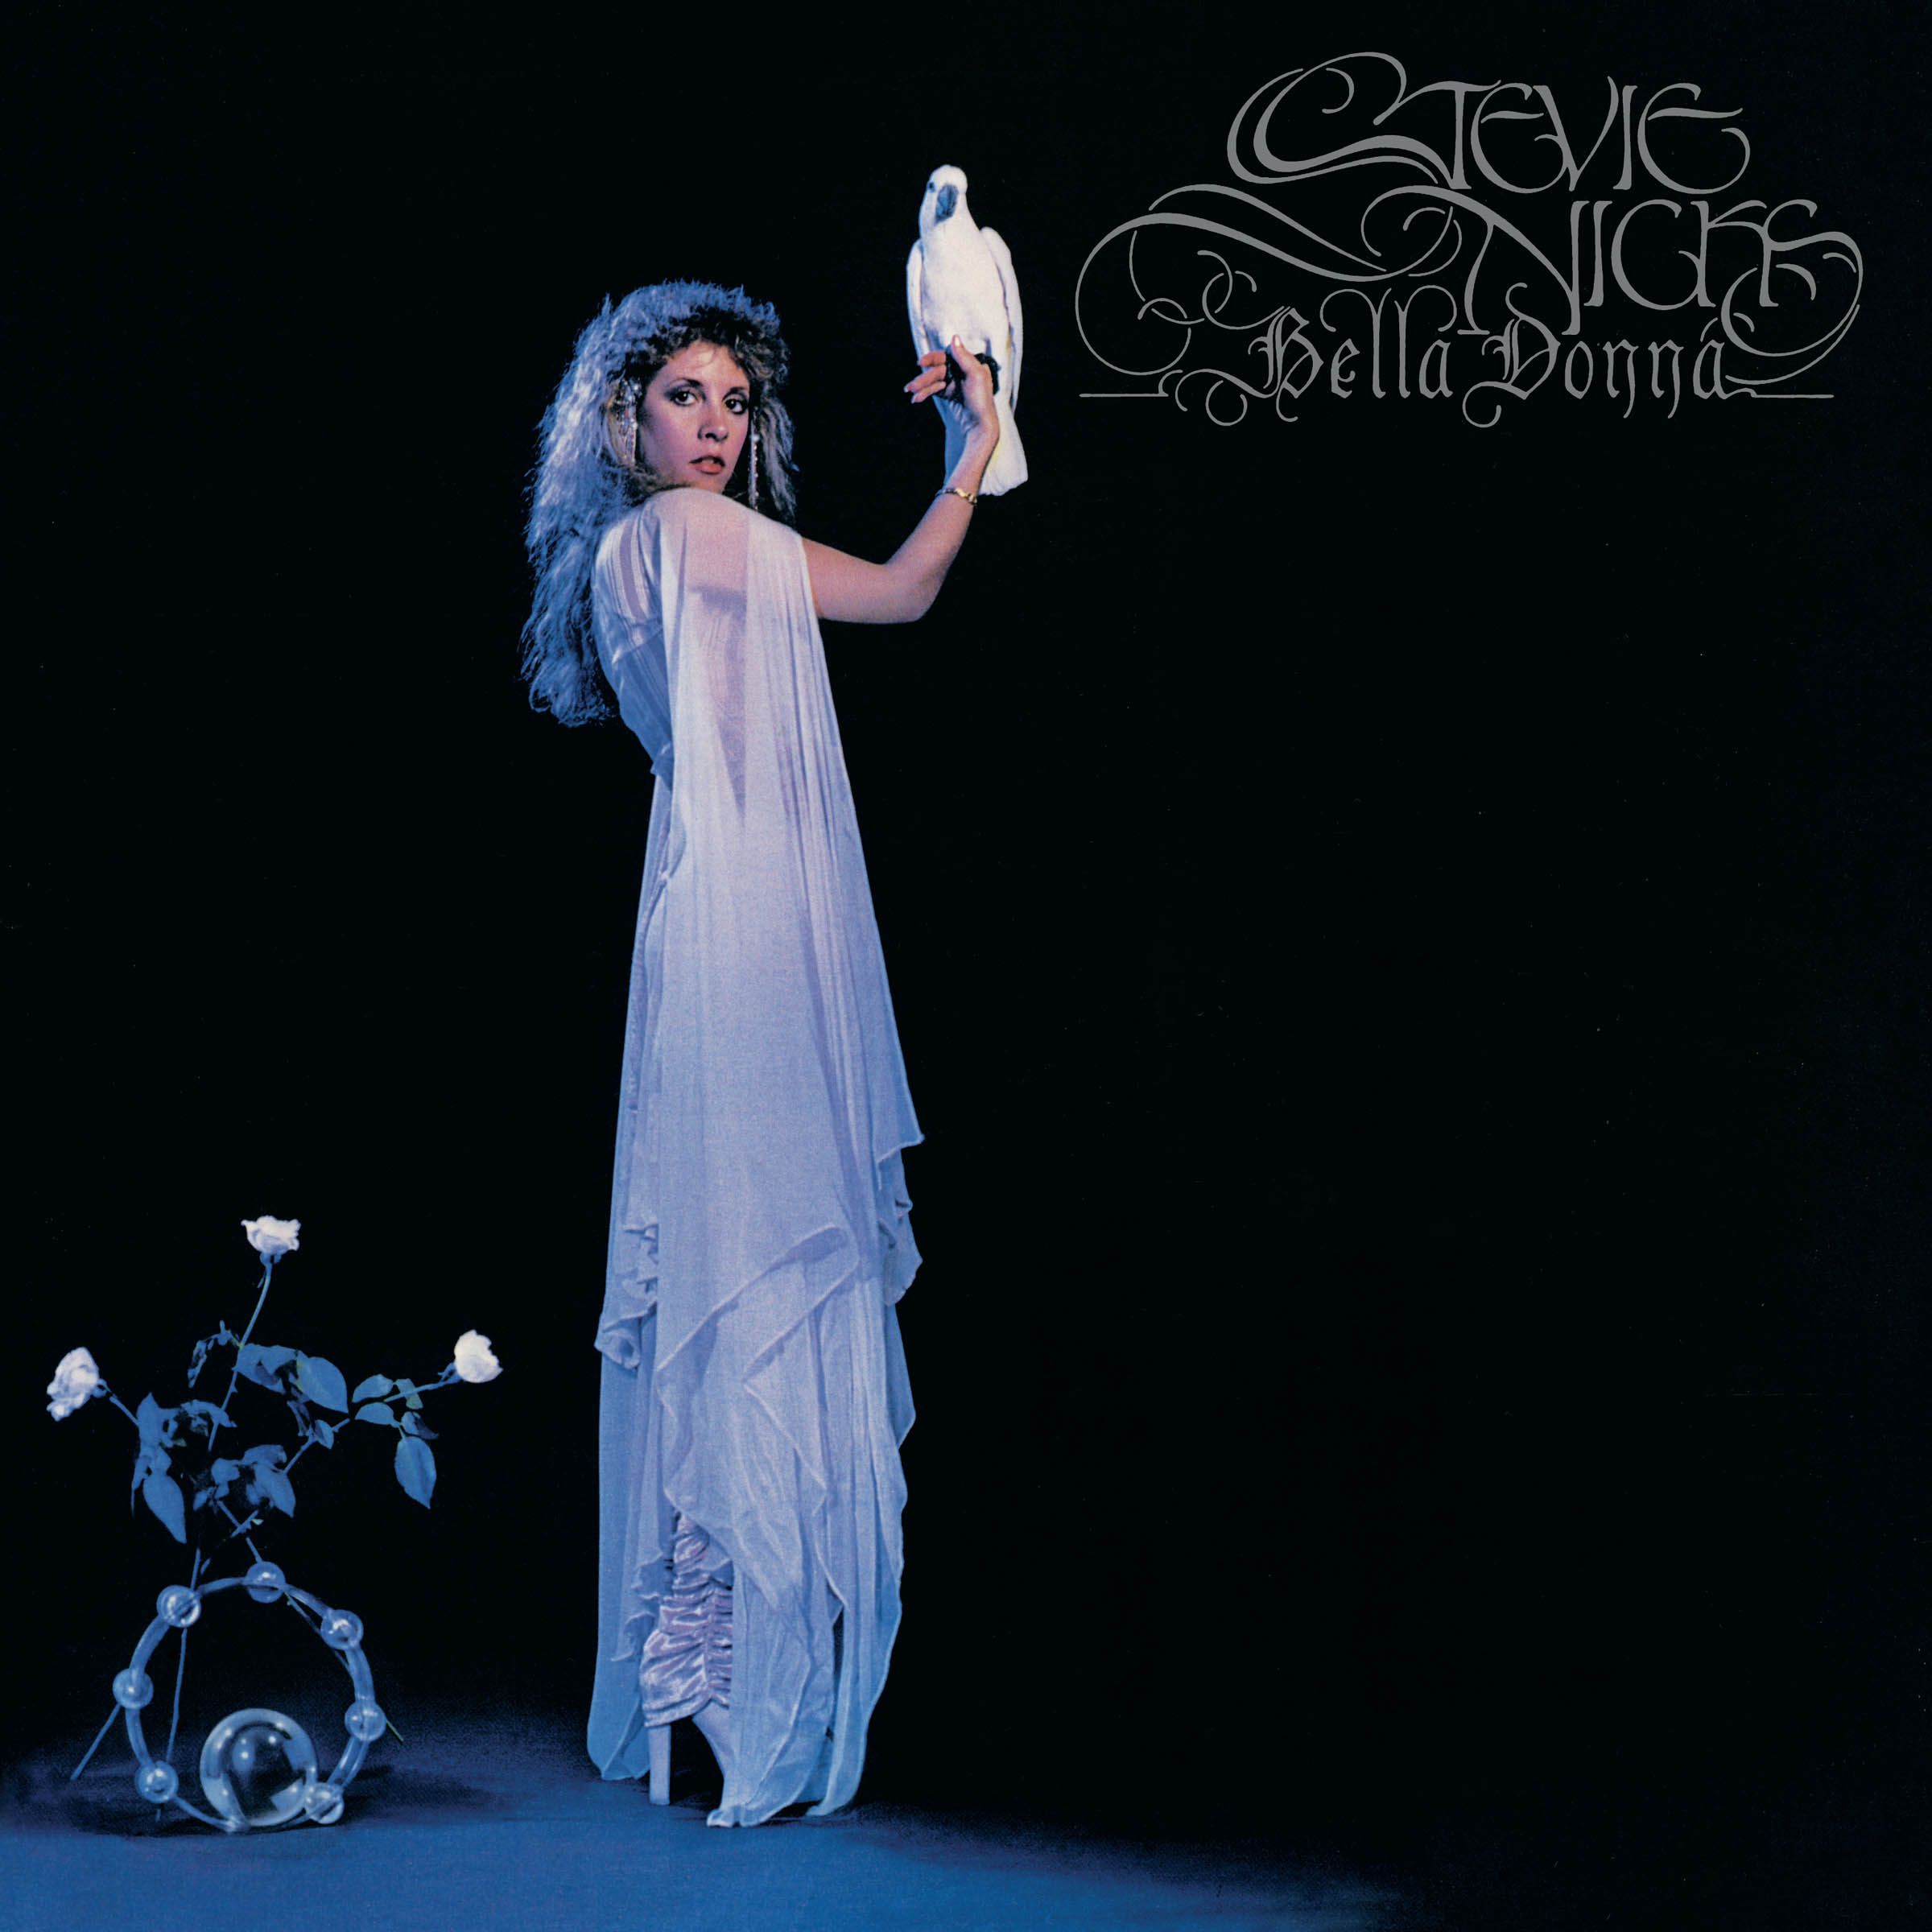 Stevie Nicks – Bella Donna {Deluxe Edition} (1981/2016) [HDTracks FLAC 24bit/96kHz]